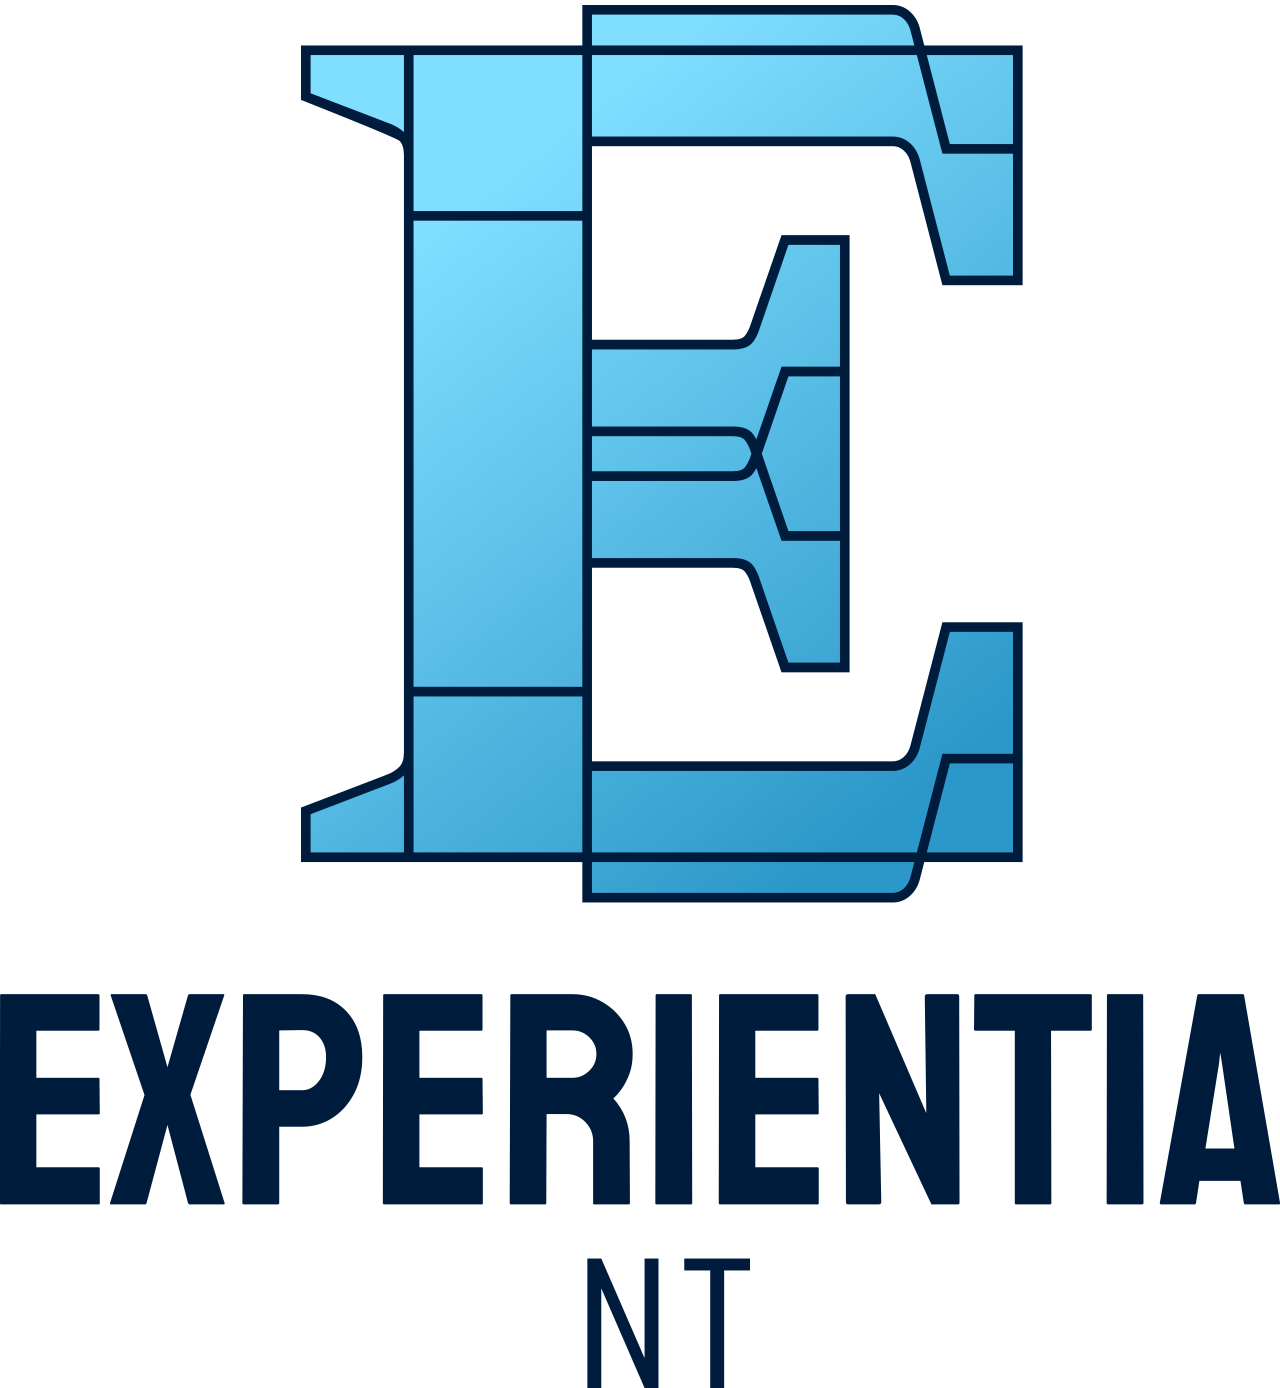 Experientia 's web page